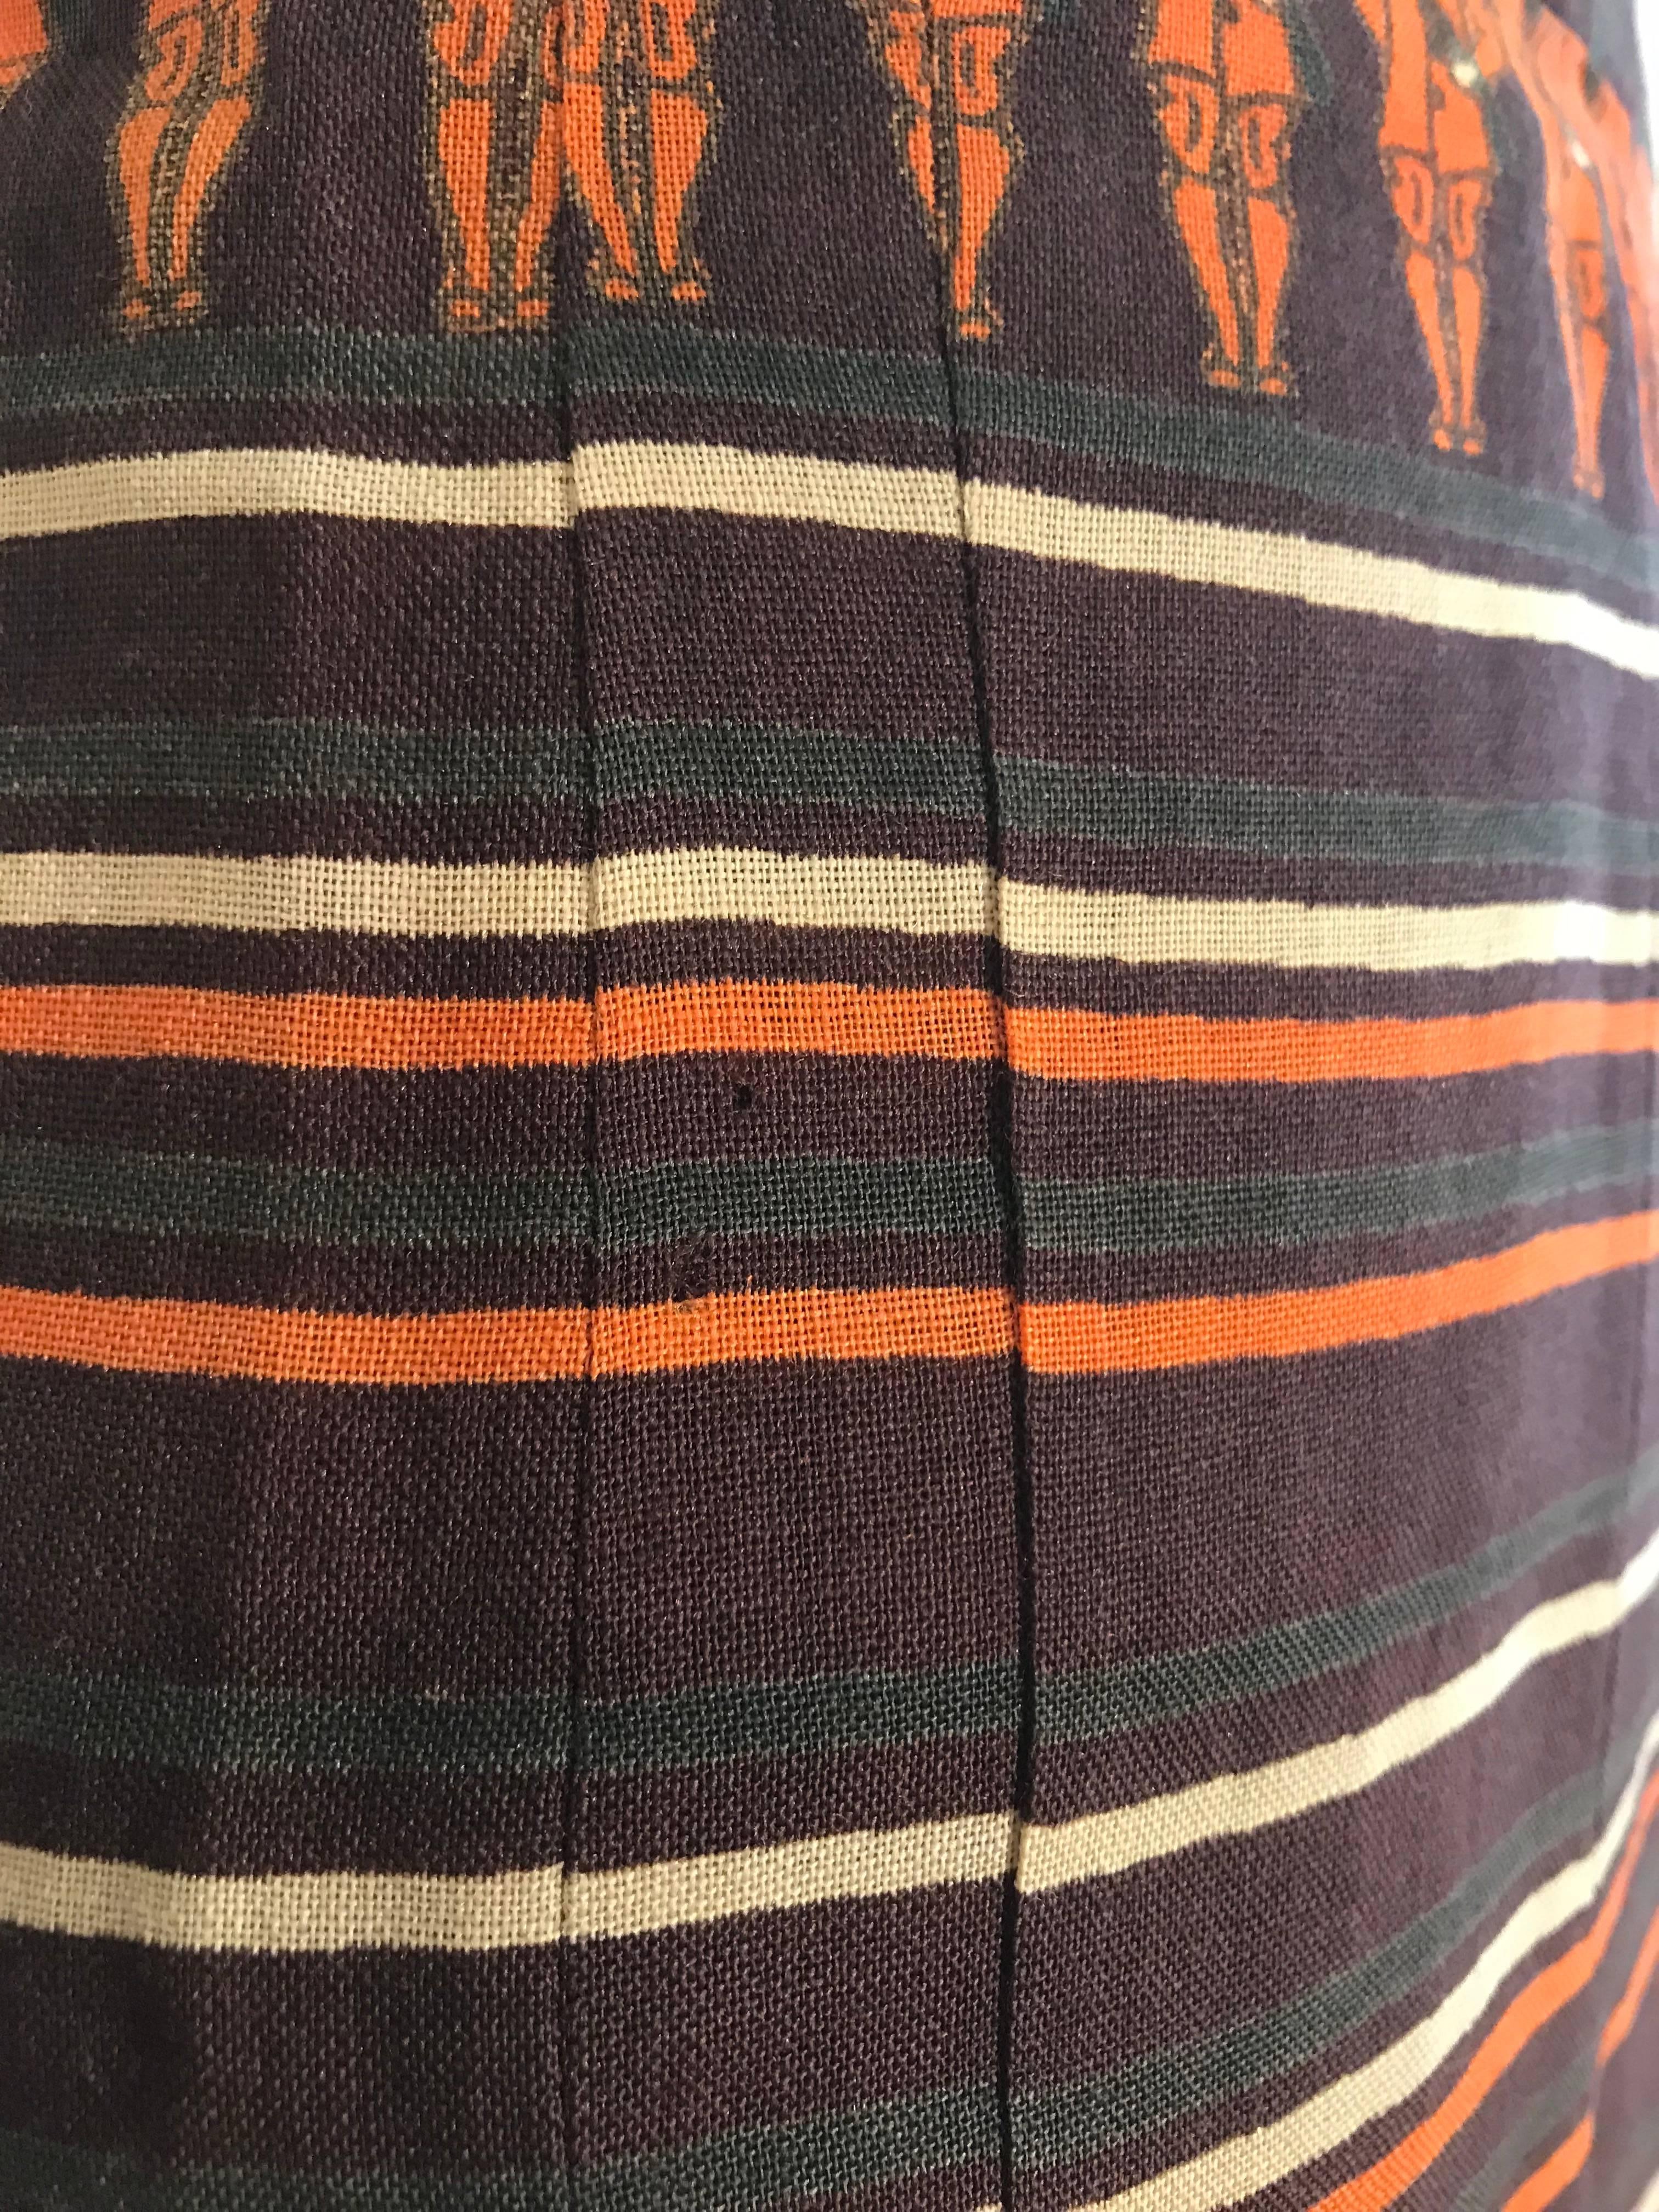 Gucci Vintage Equestrian Rider Brown Orange Cream Stripe Print Pleat Skirt, 1970 For Sale 1